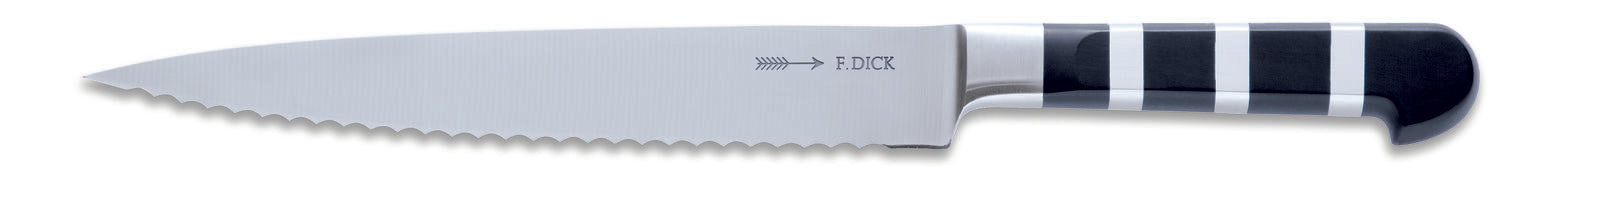 F. Dick (8195521) 8" Carving Knife, Serrated Edge - 1905 Series-cityfoodequipment.com